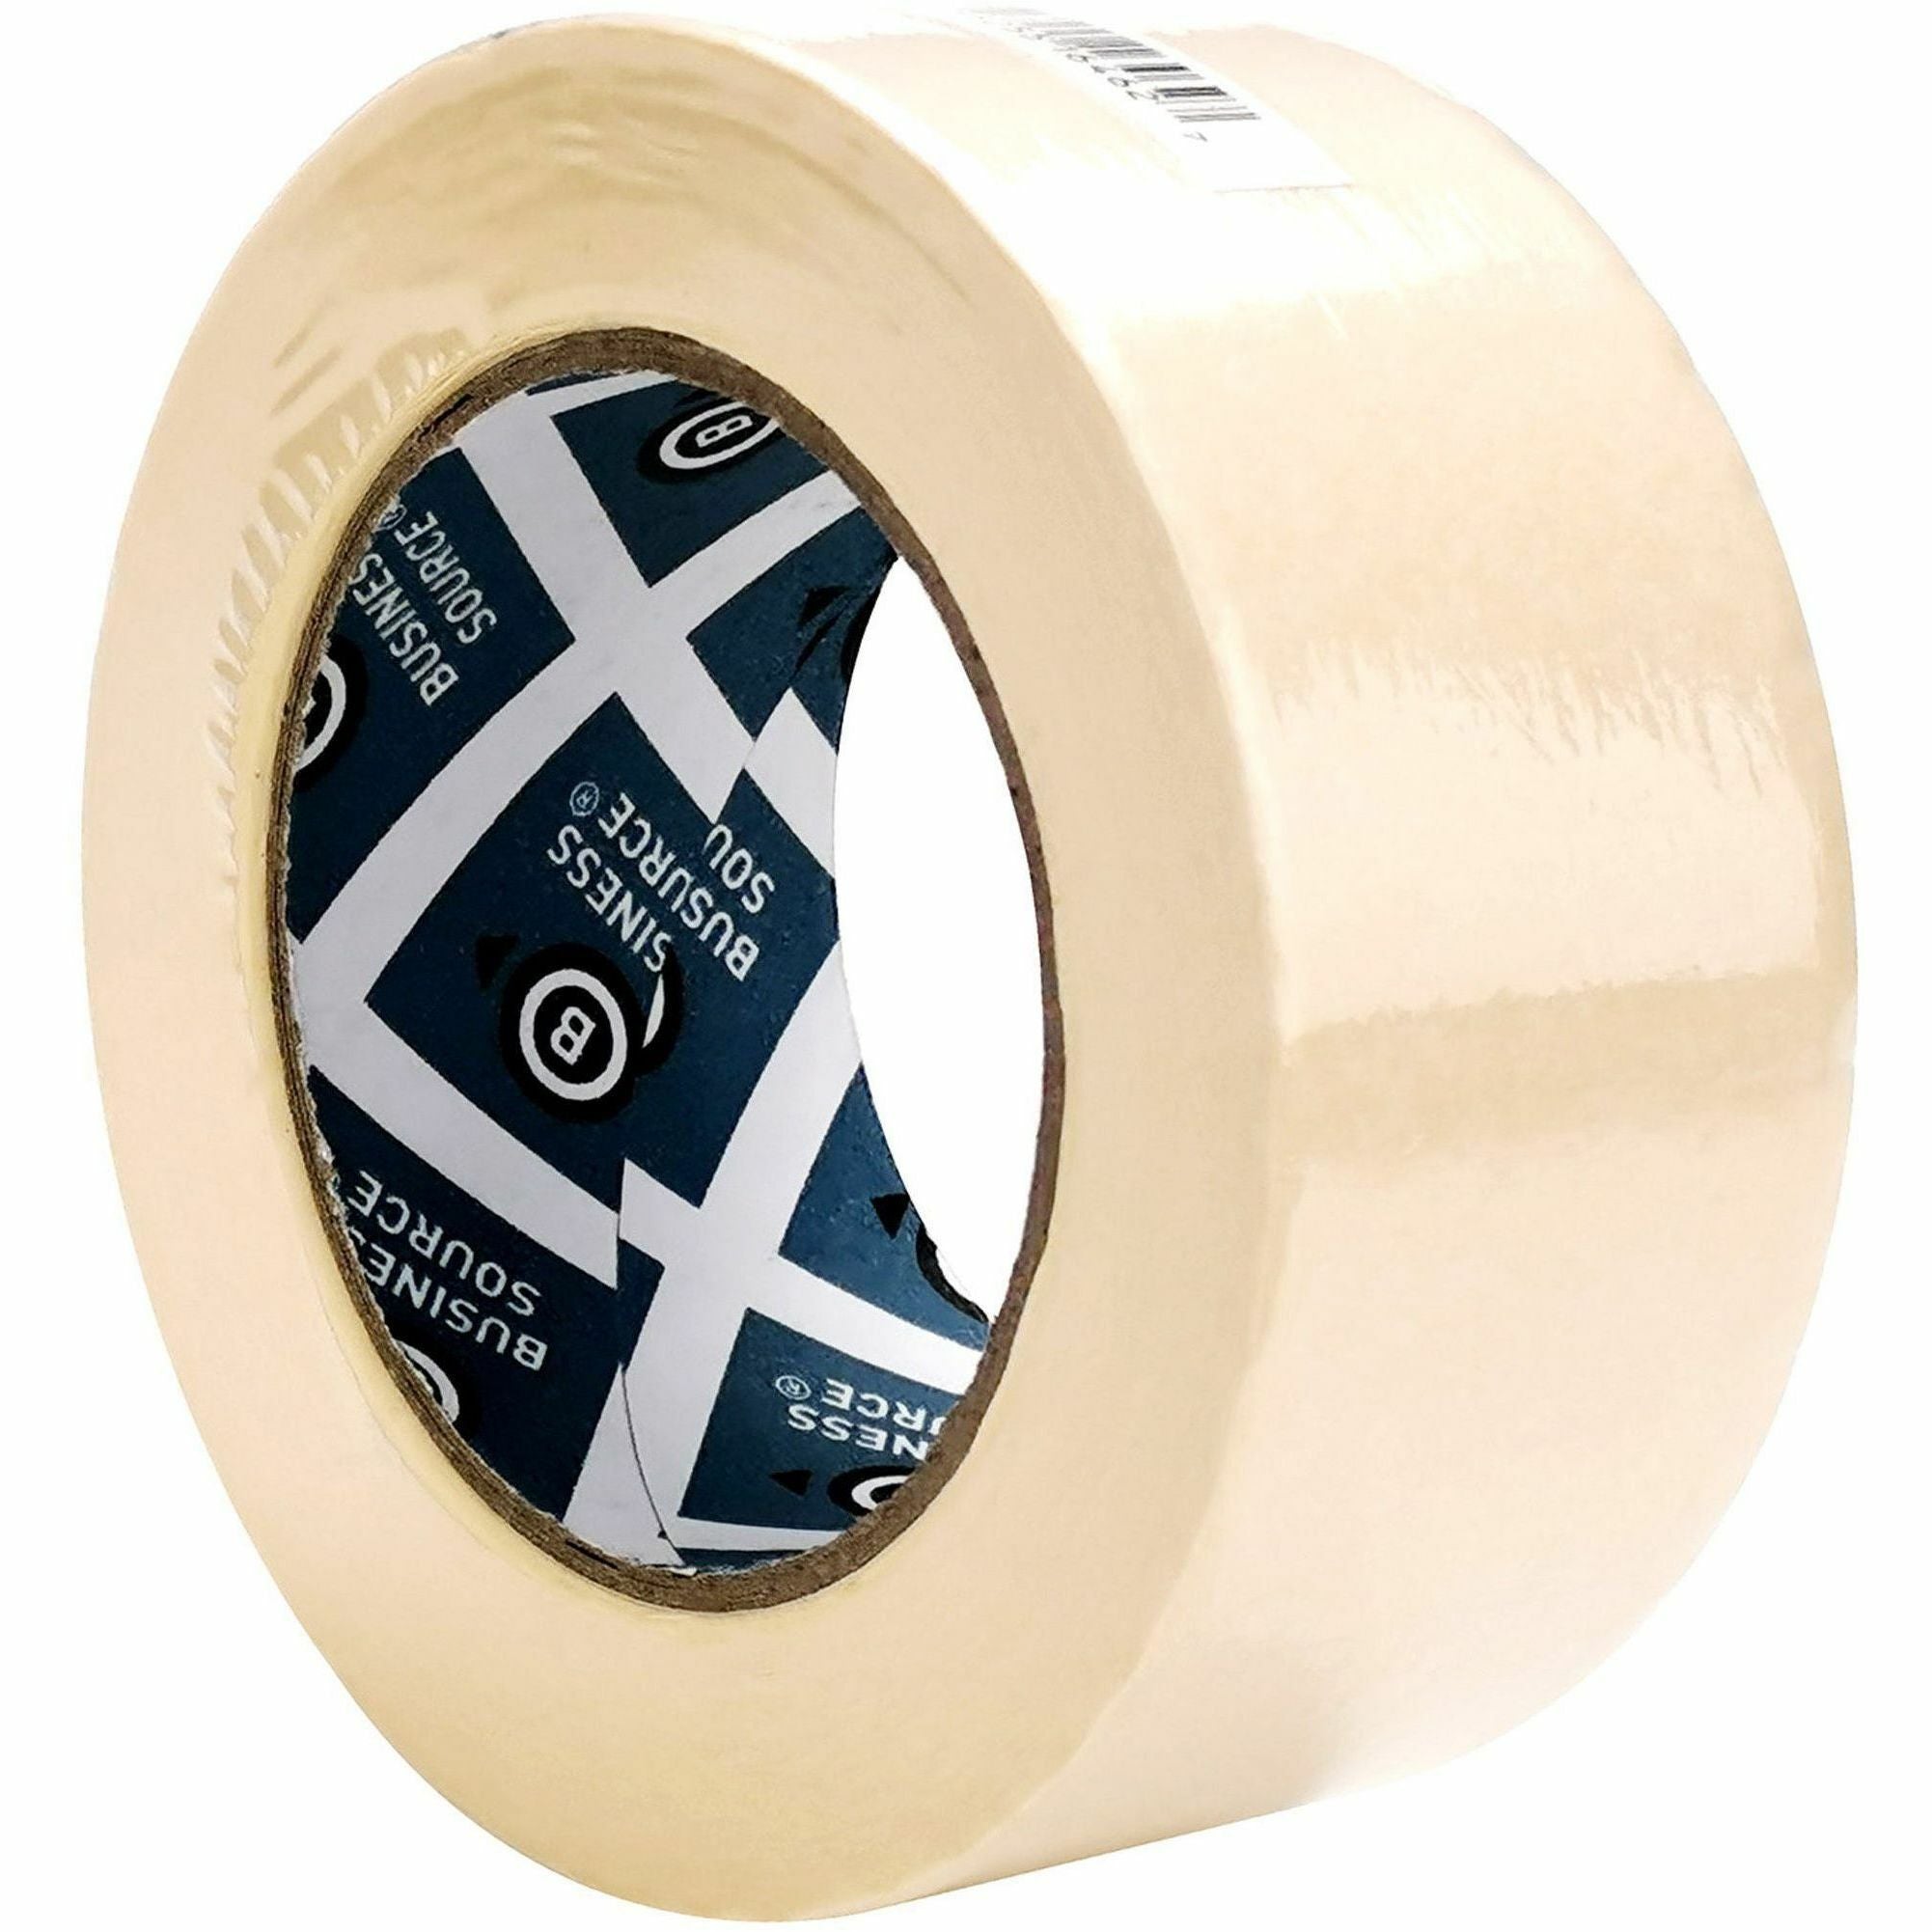 business-source-utility-purpose-masking-tape-60-yd-length-x-2-width-3-core-crepe-paper-backing-for-bundling-holding-sealing-masking-6-pack-tan_bsn16462pk - 2